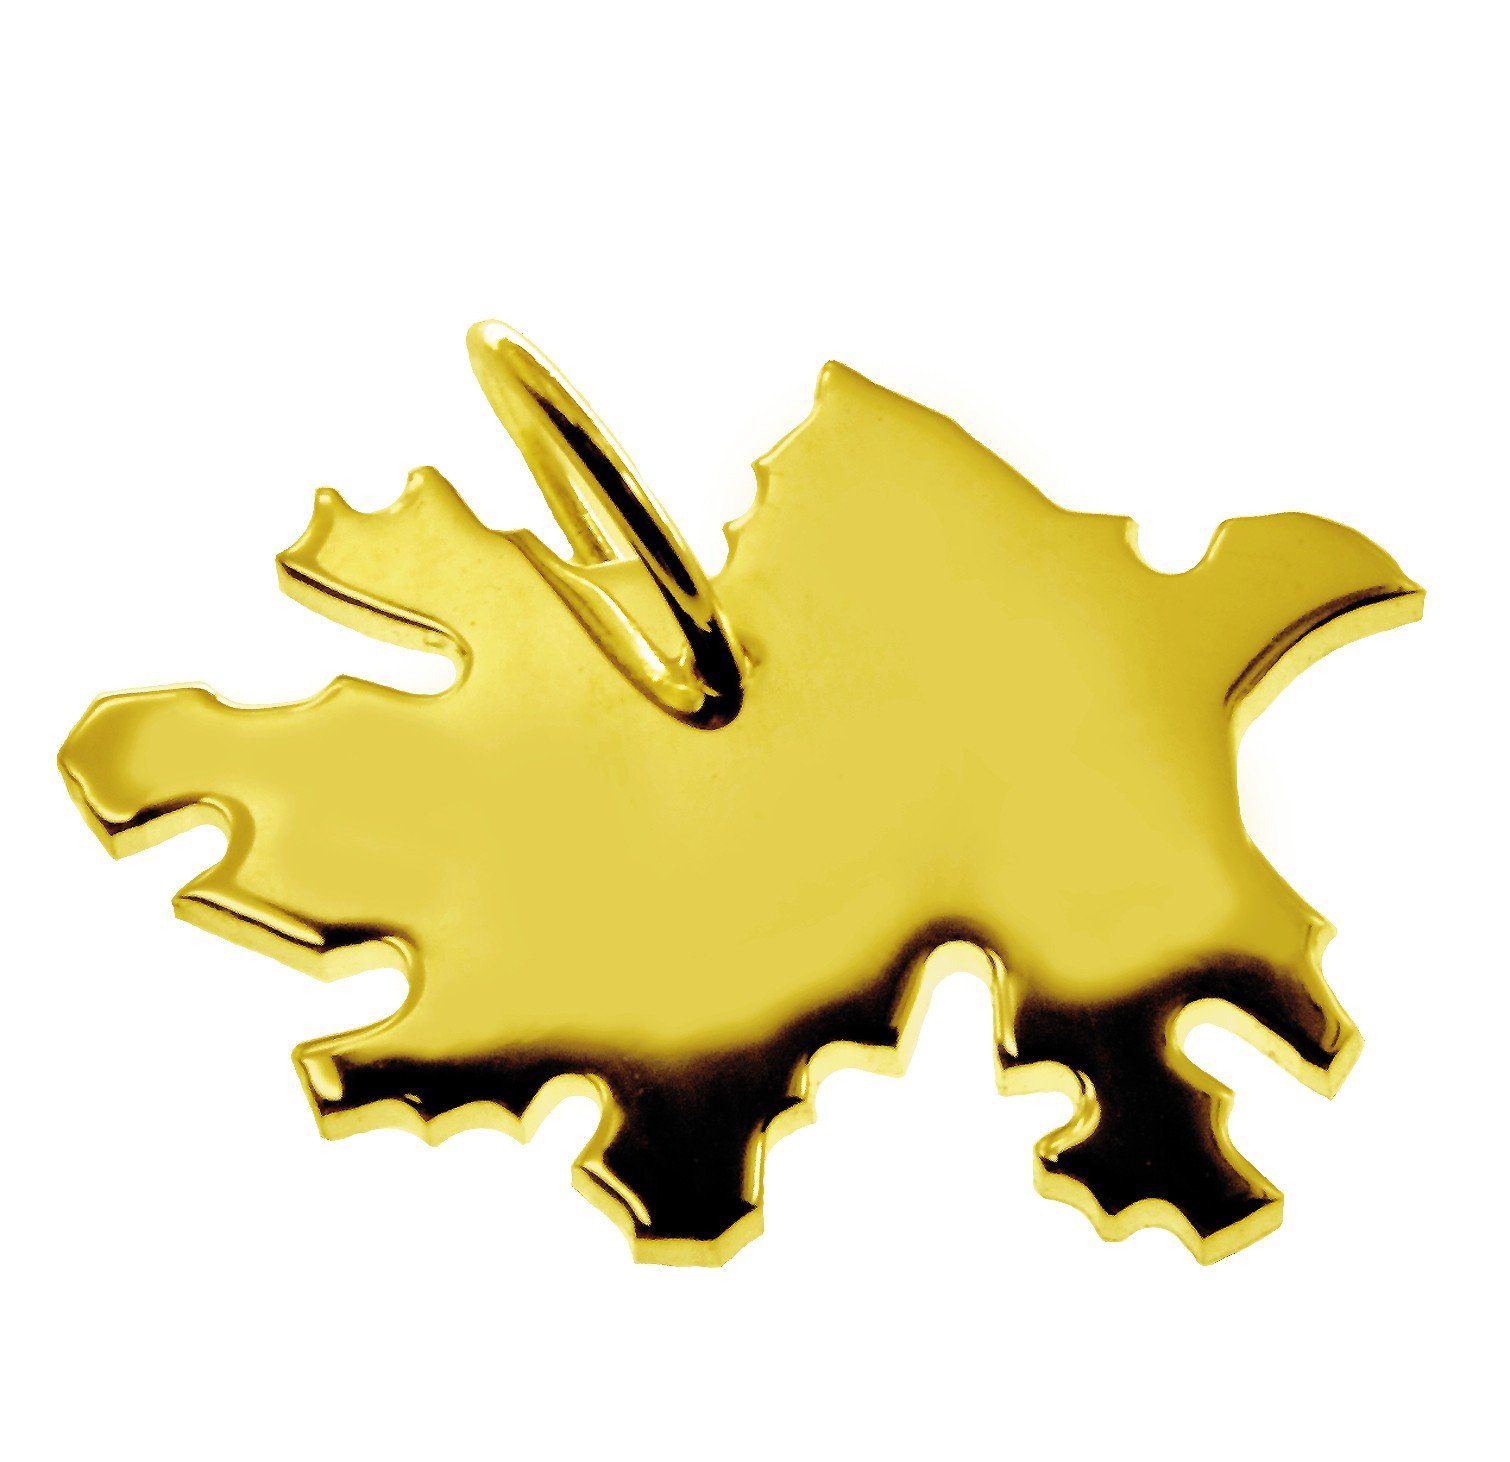 schmuckador Kettenanhänger Kettenanhänger in der Form von der Landkarte Azerbaijan in massiv 585 Gelbgold